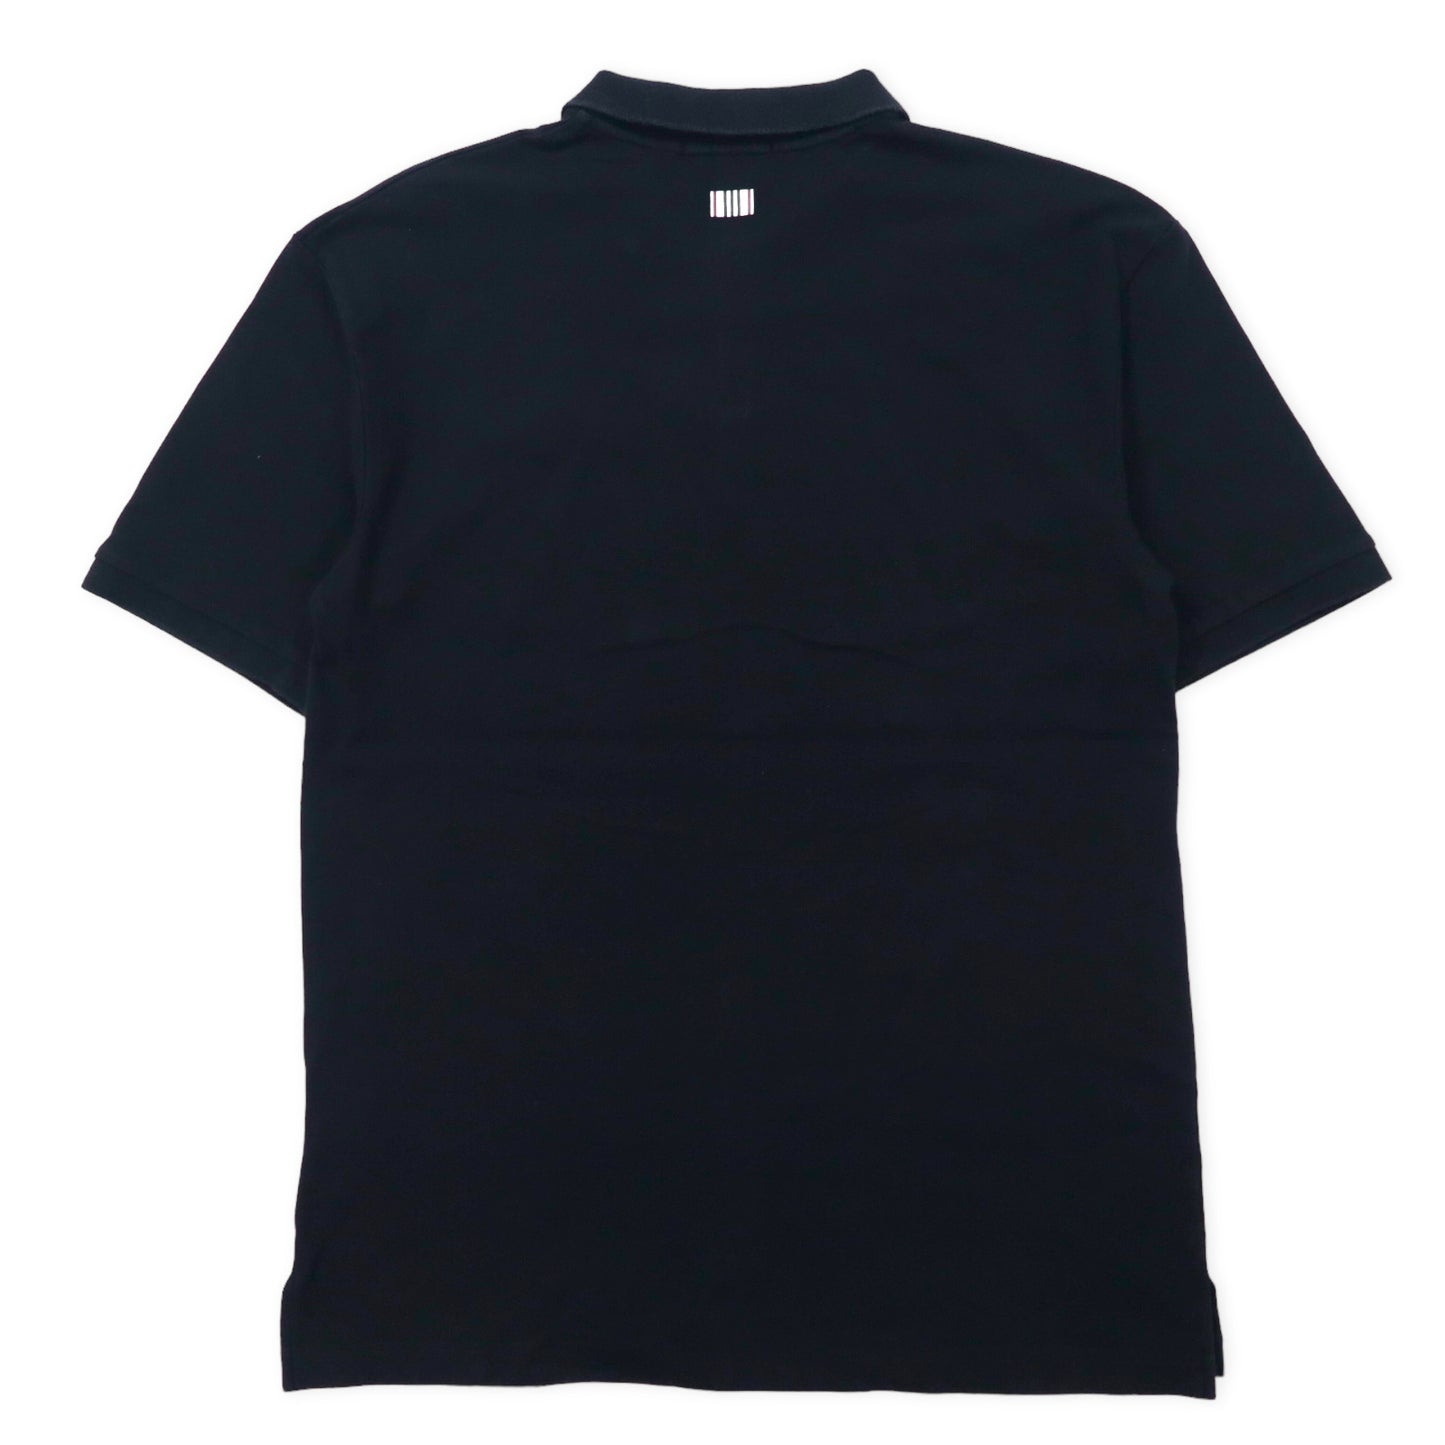 BURBERRY BLACK LABEL ポロシャツ 3 ブラック コットン ワンポイントロゴ刺繍 BMV38-436-09